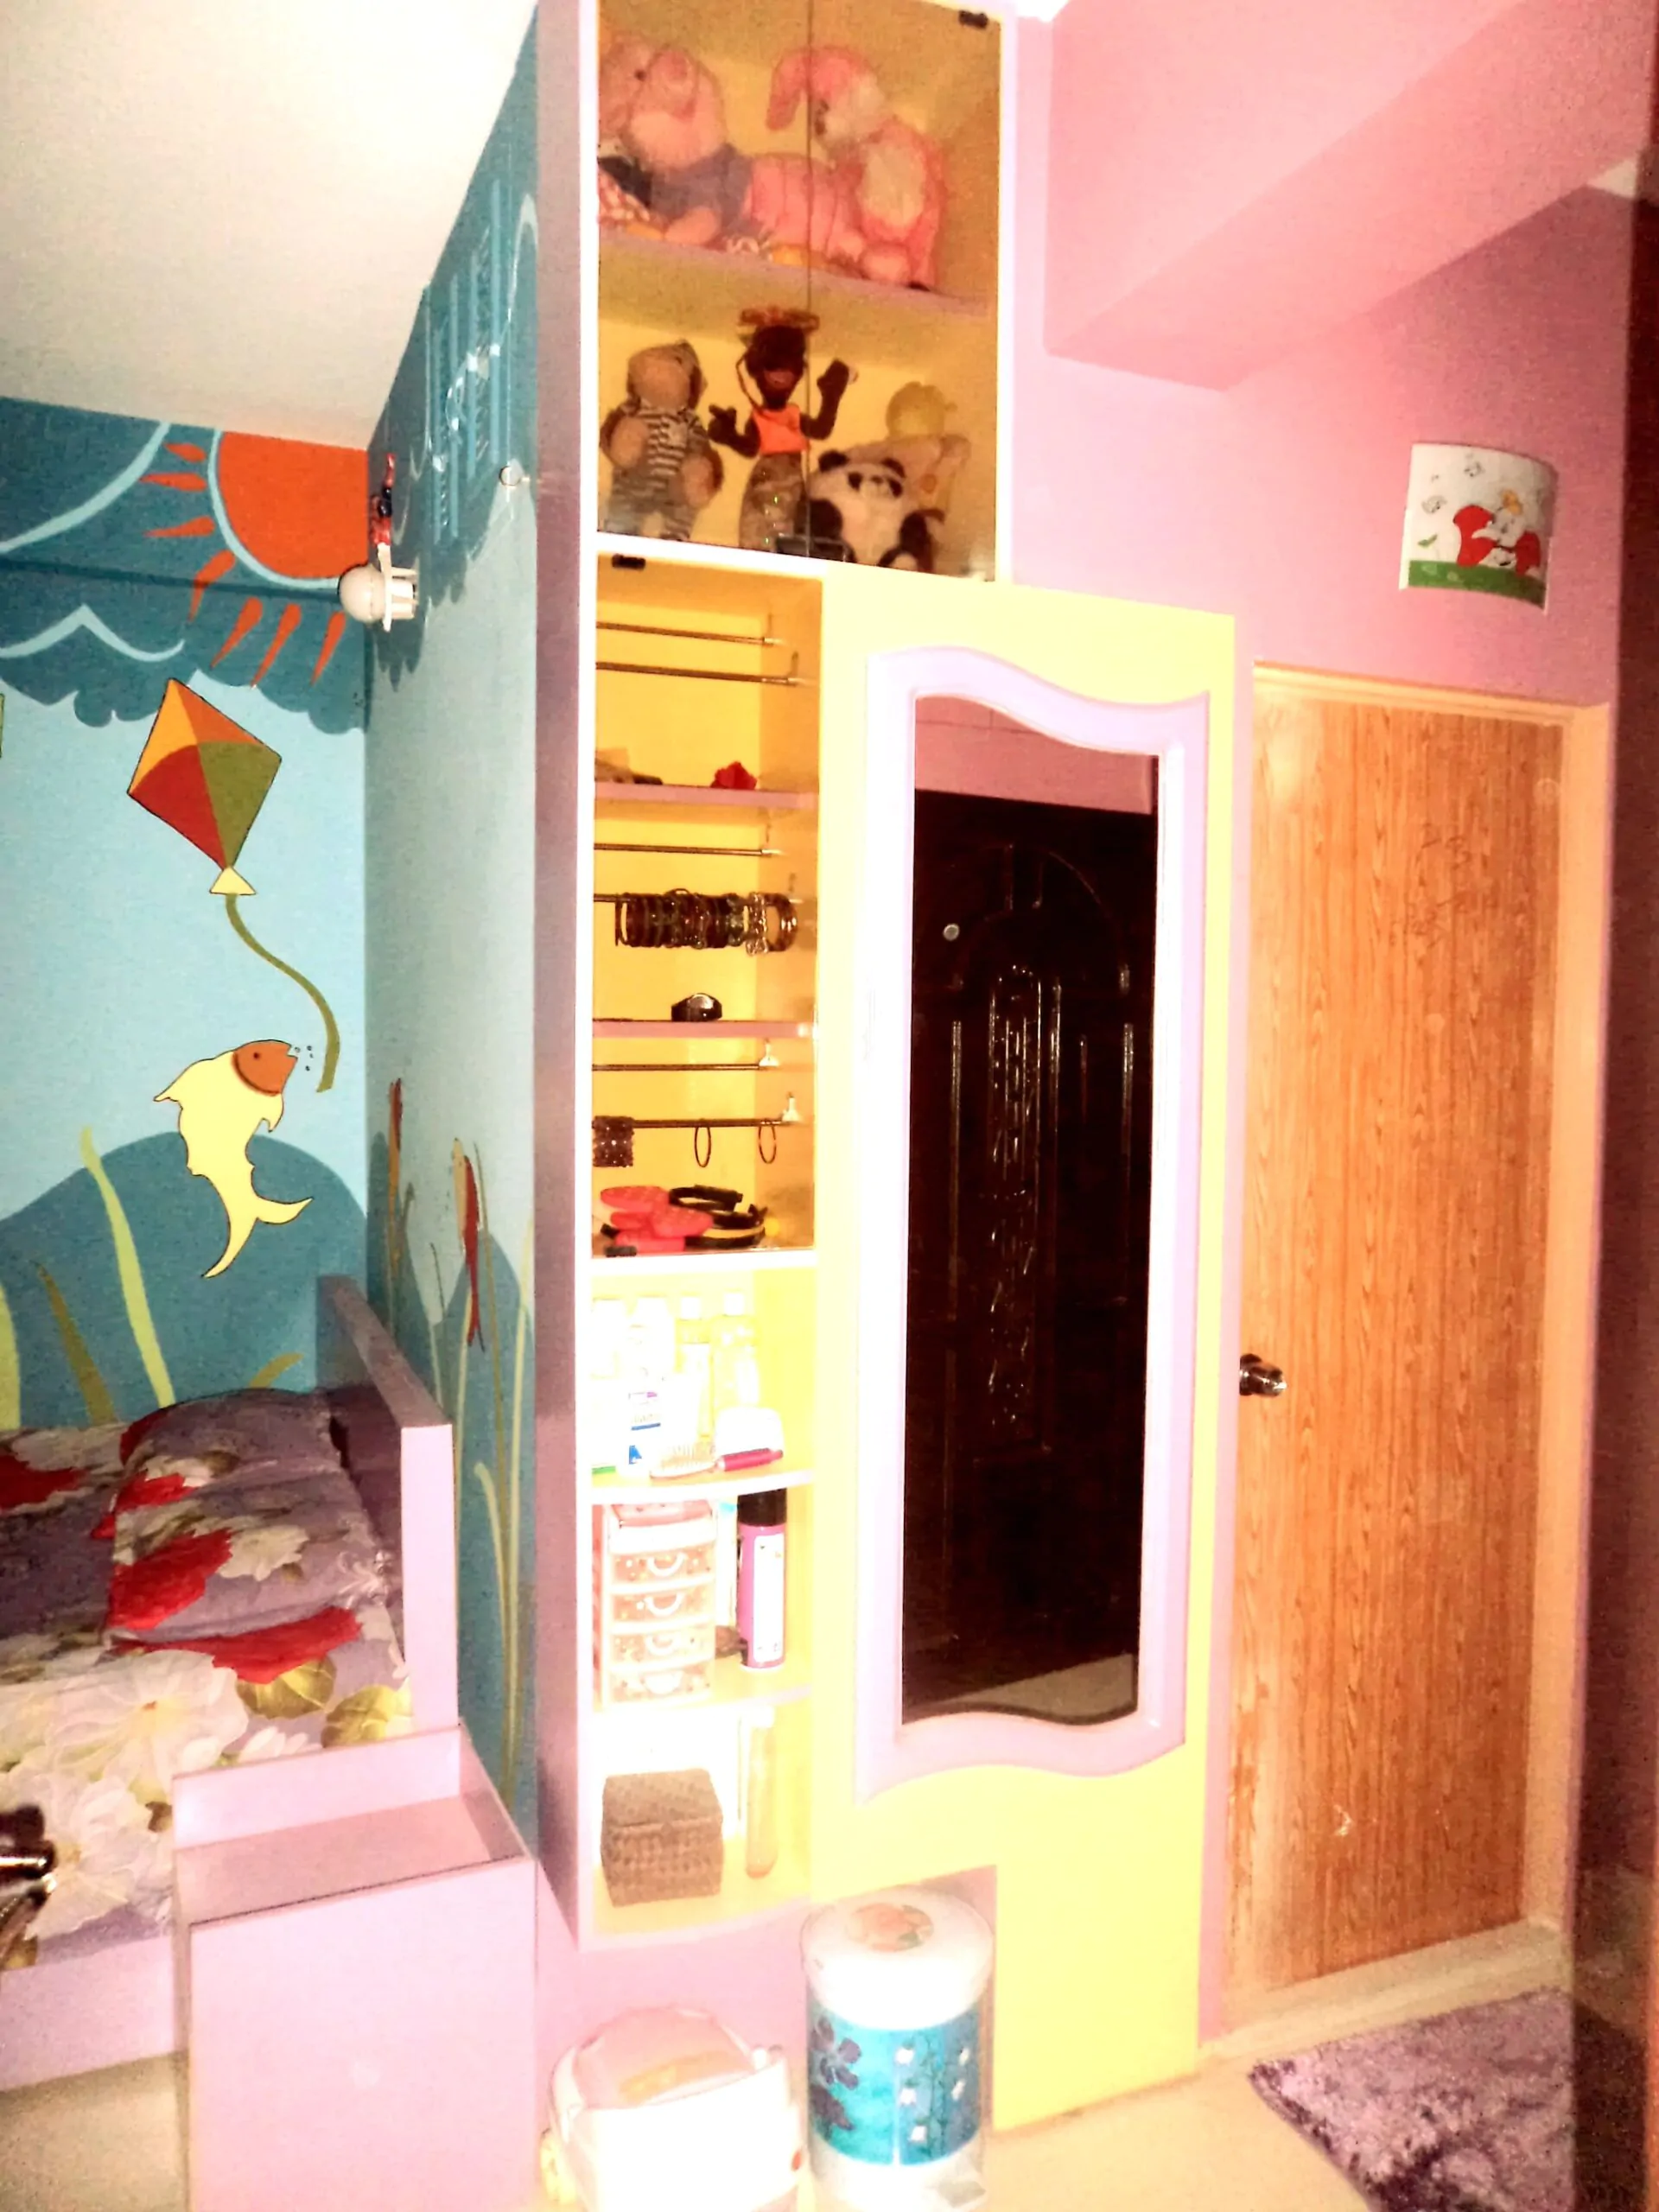 Habiba Dhanmondi Complete Project Child Bedroom Interior Design (8)